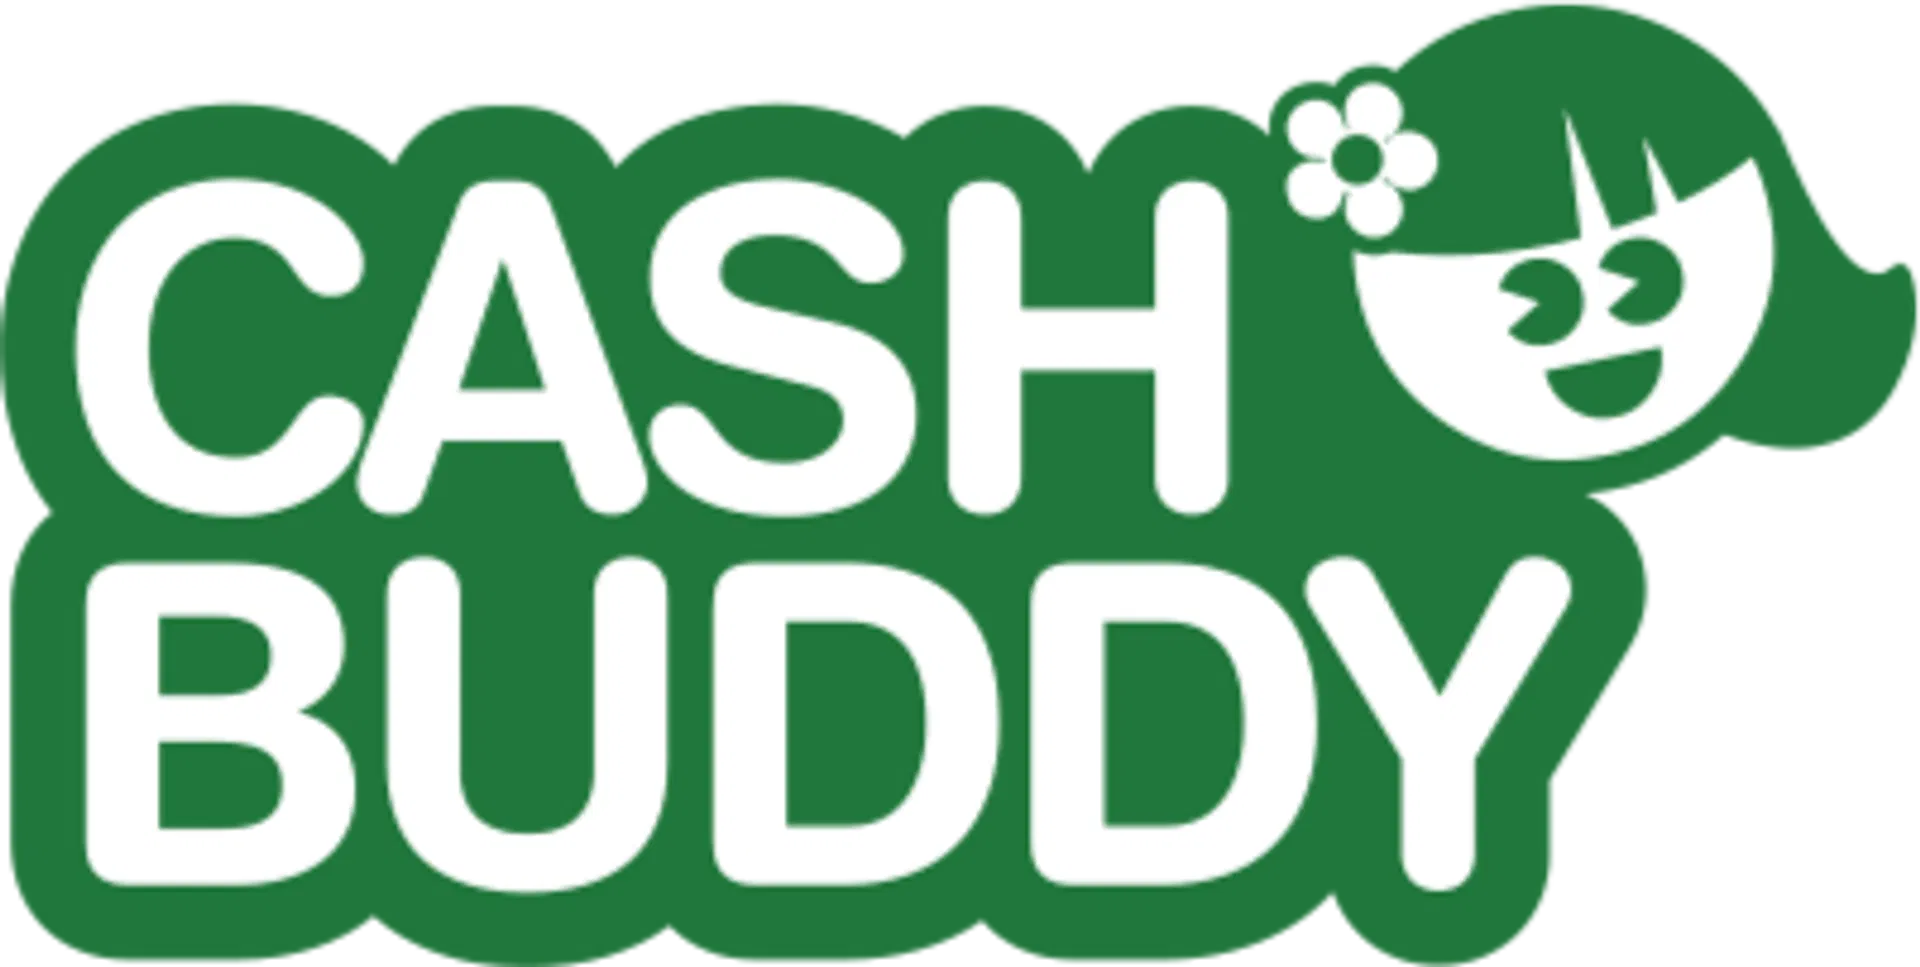 Cashbuddy logga i grön färg